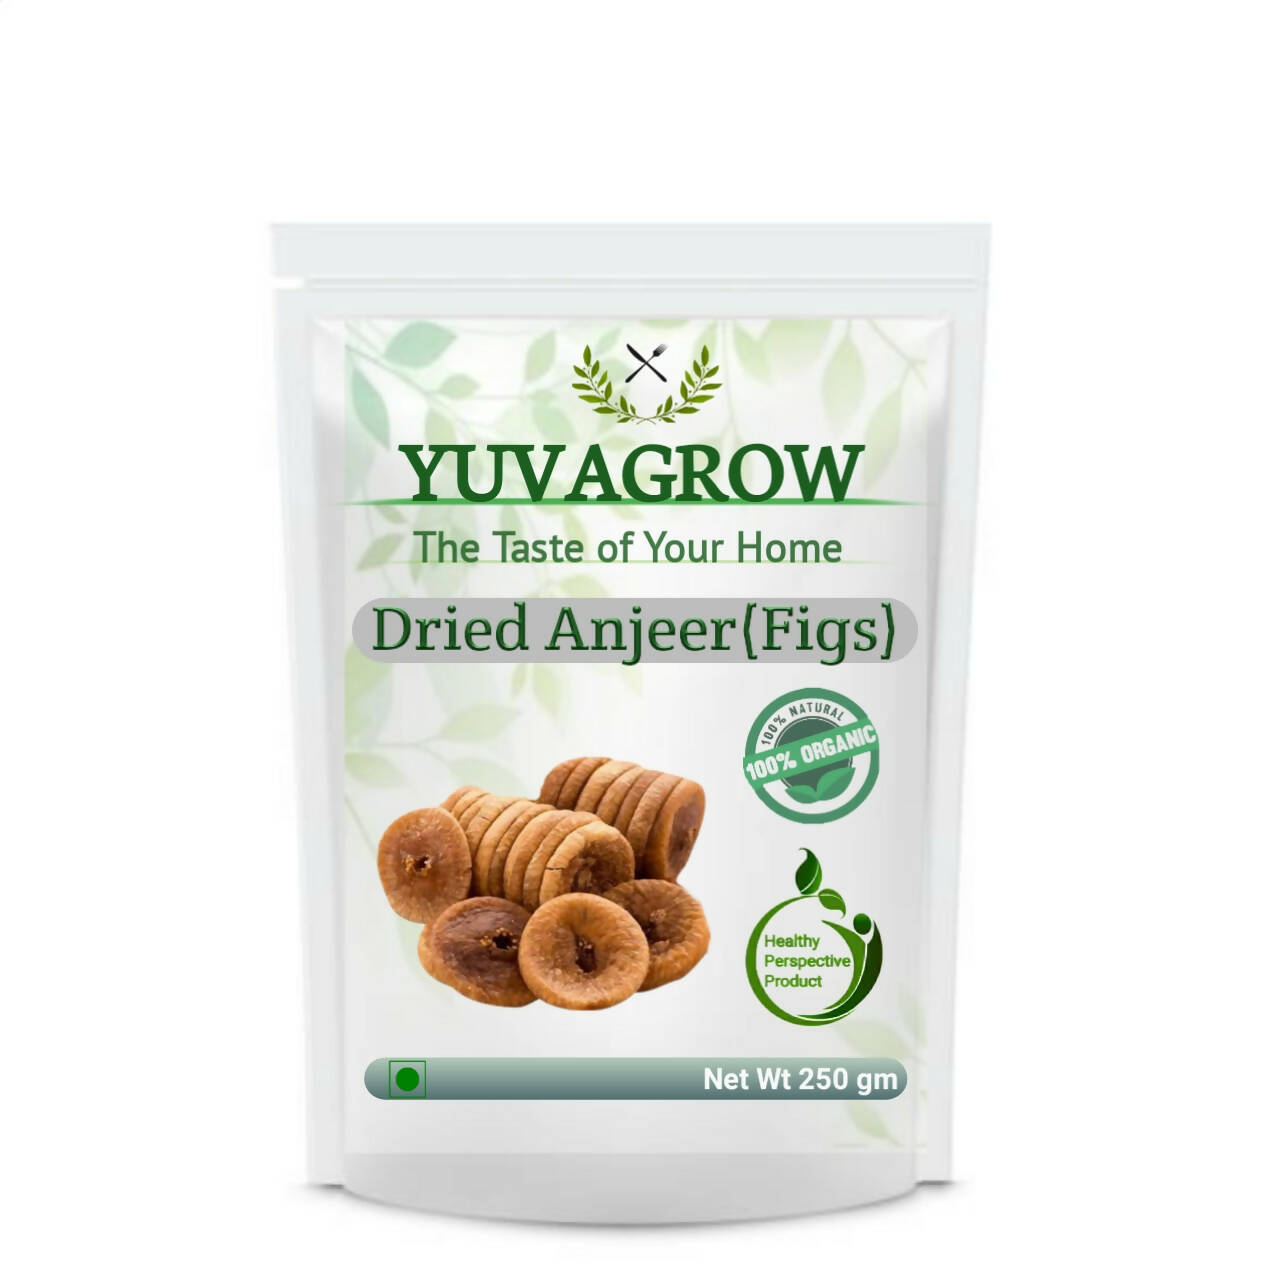 Yuvagrow Dried Anjeer (Figs) - buy in USA, Australia, Canada